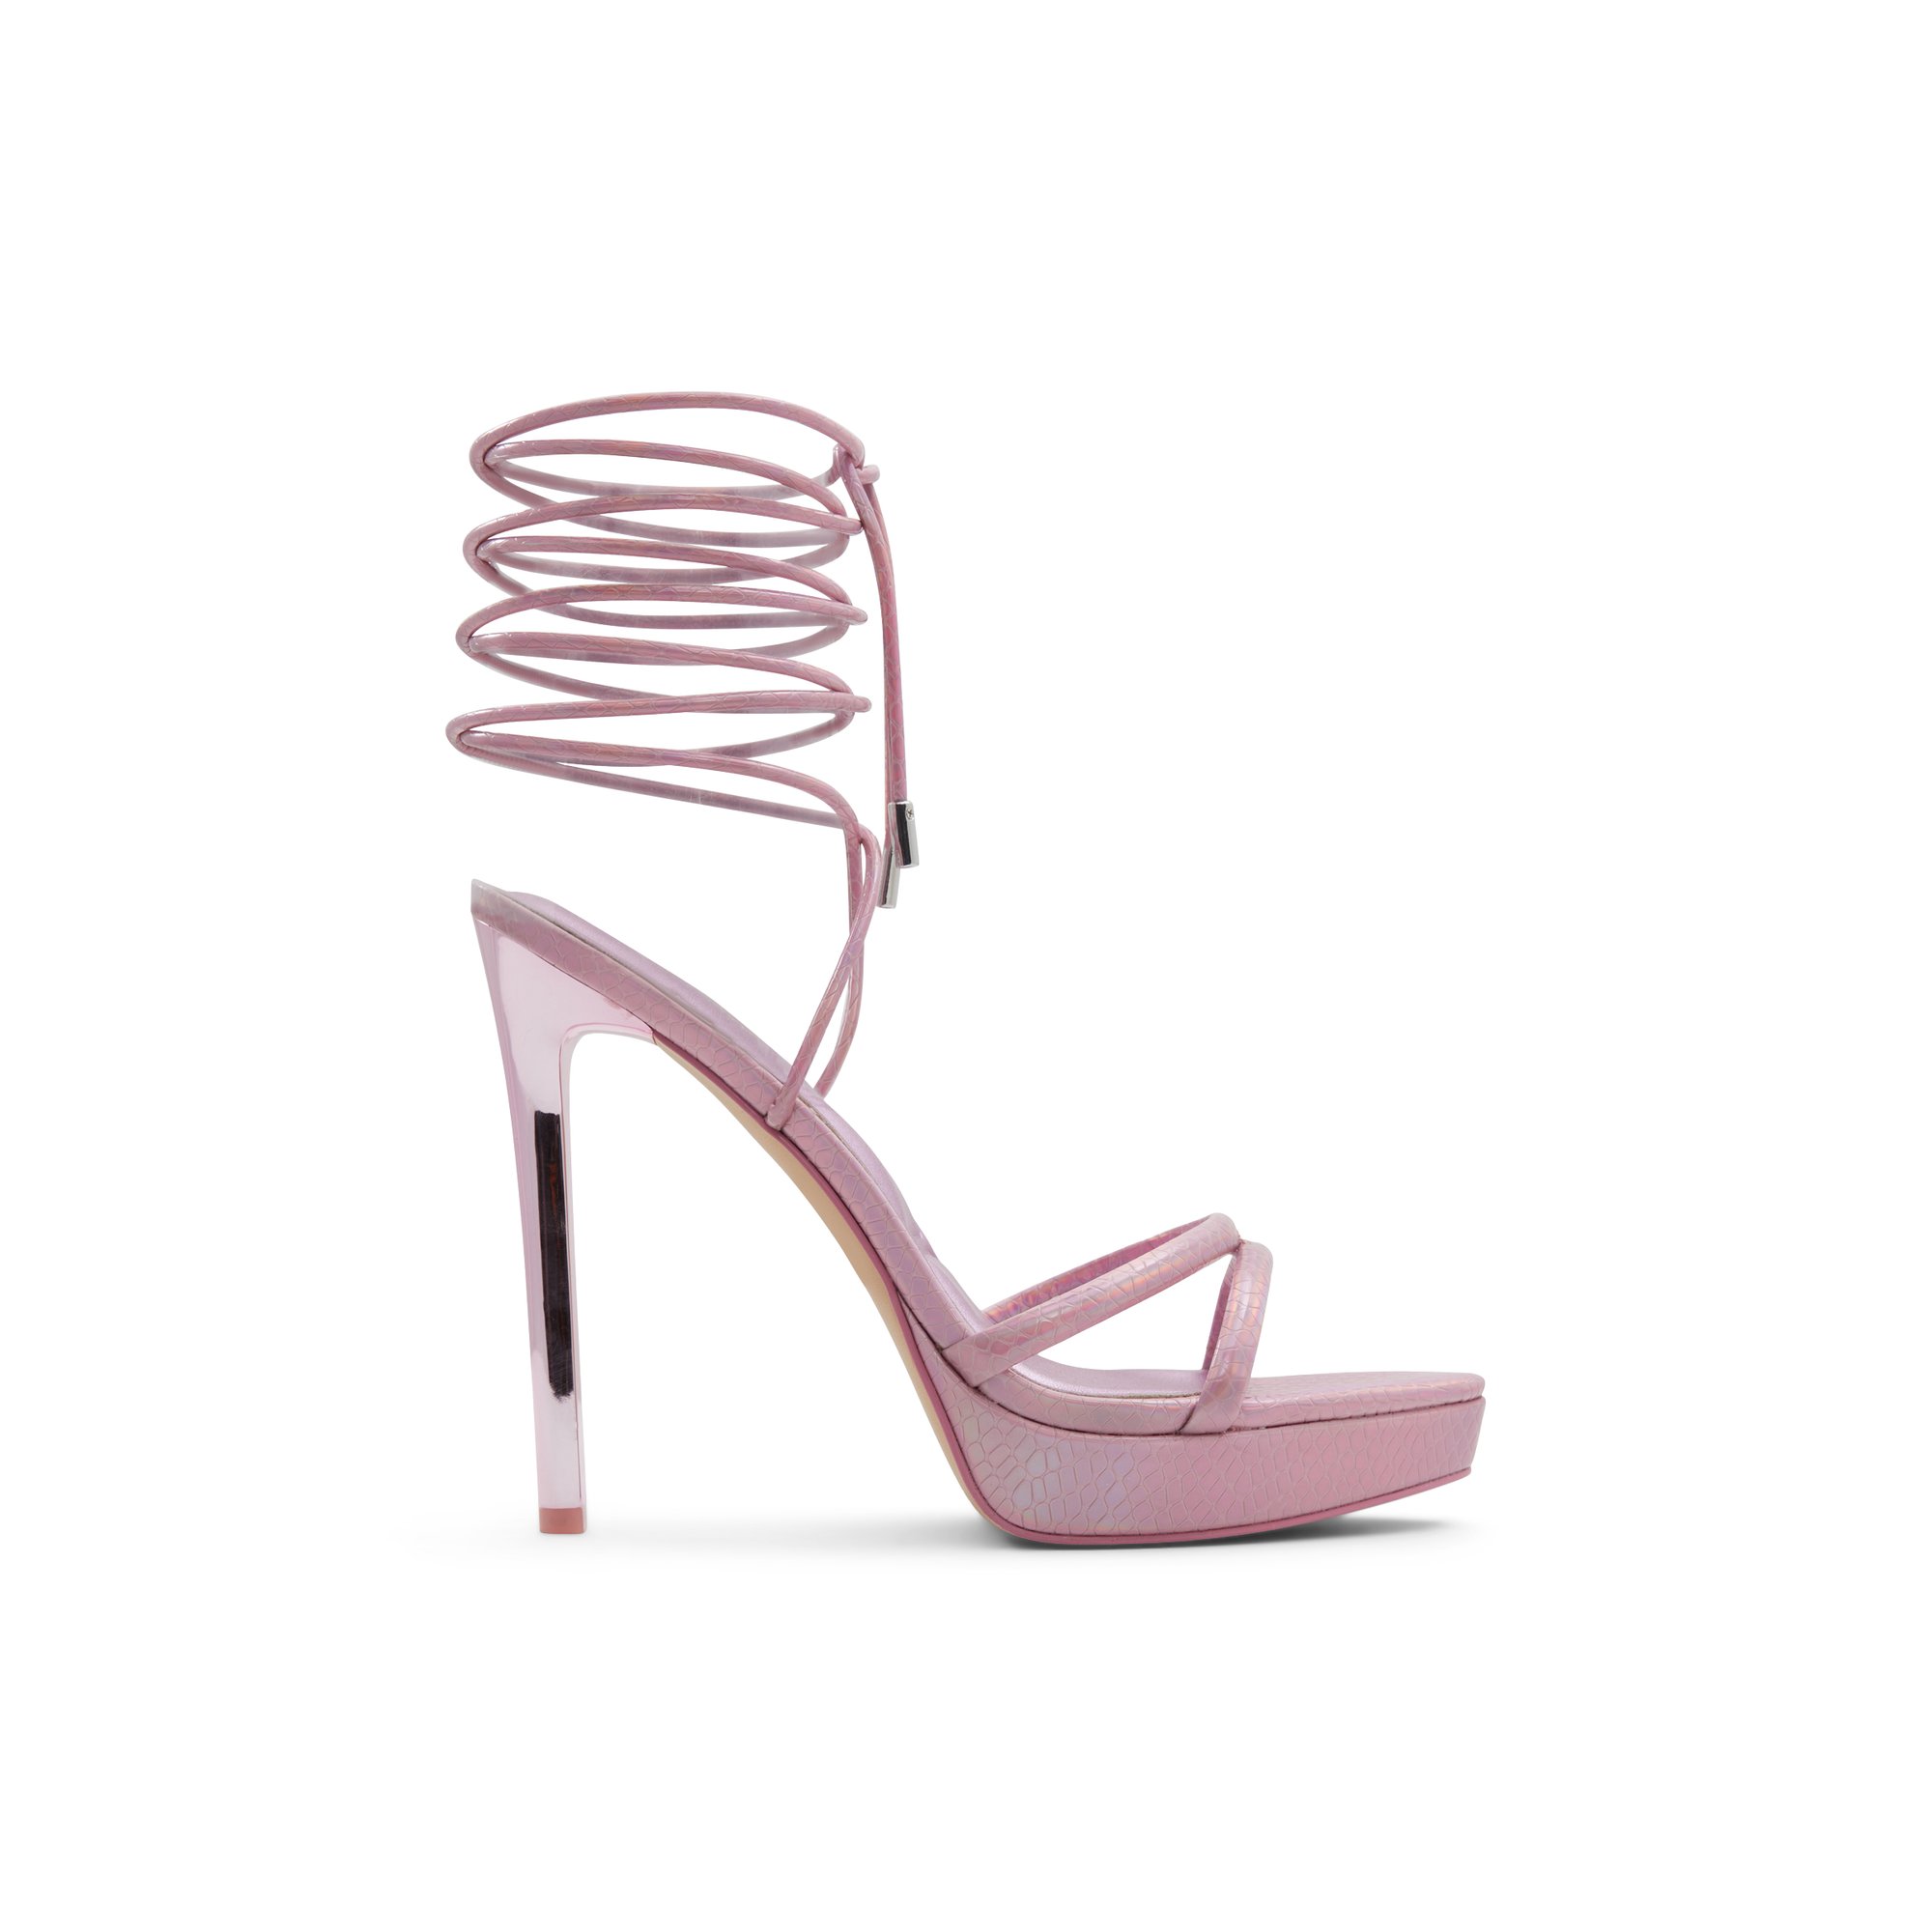 ALDO Izabella - Women's Strappy Sandal Sandals - Pink